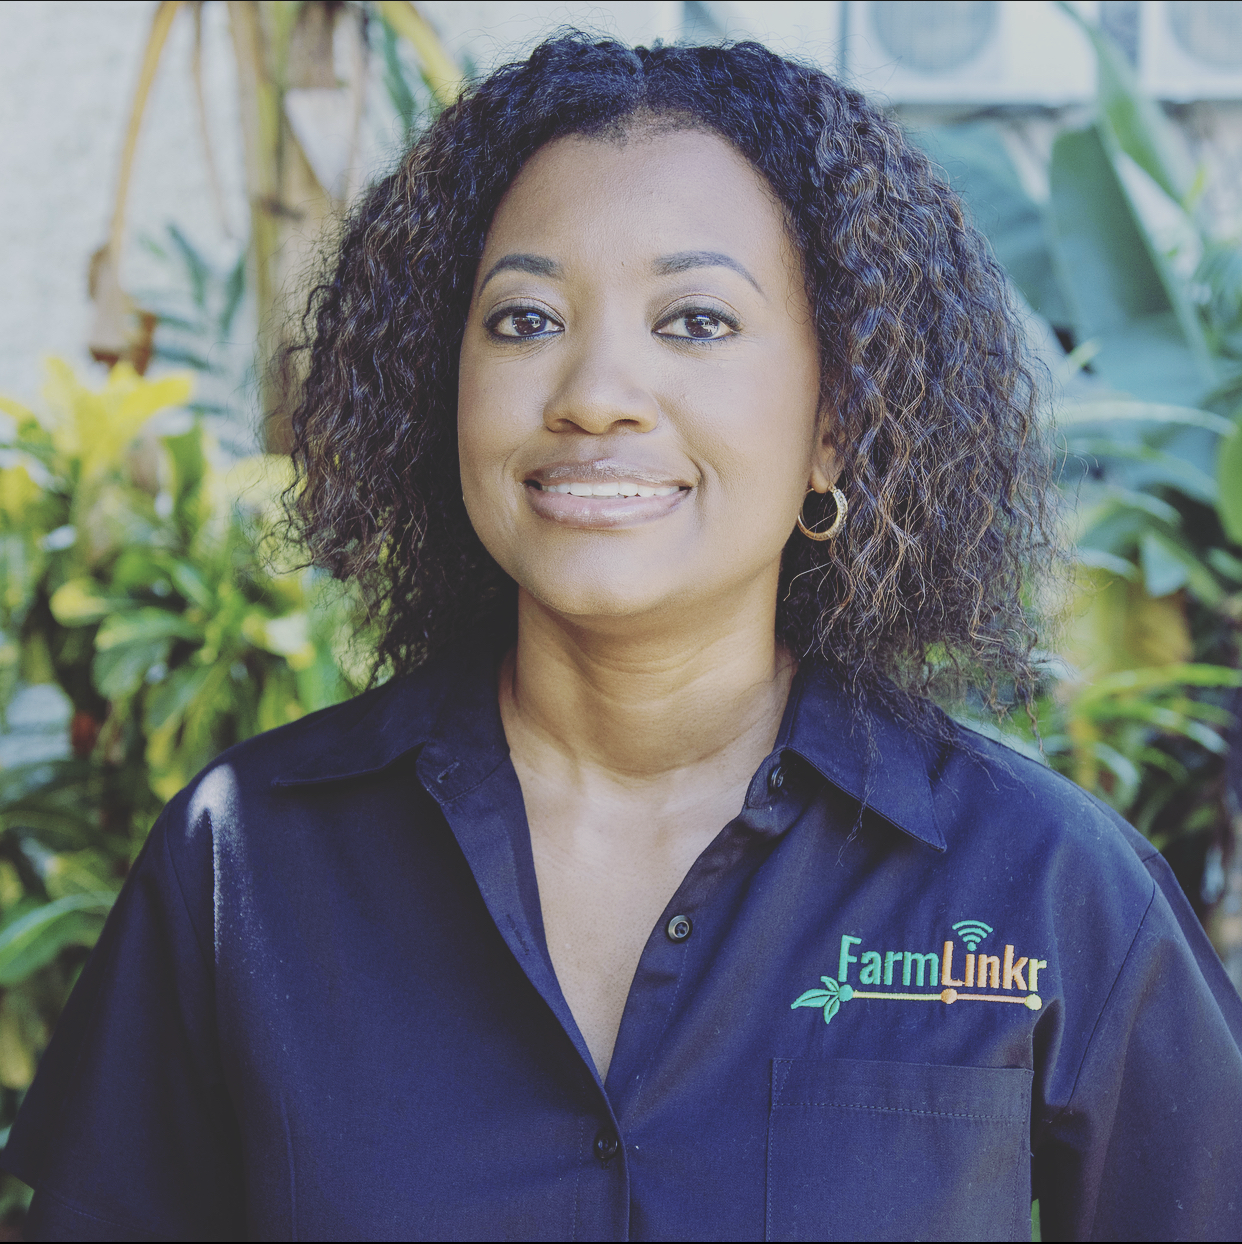 Jamaican Owned FarmLinkr Chosen for Newchip’s Intensive Global Pre-Seed Accelerator Program